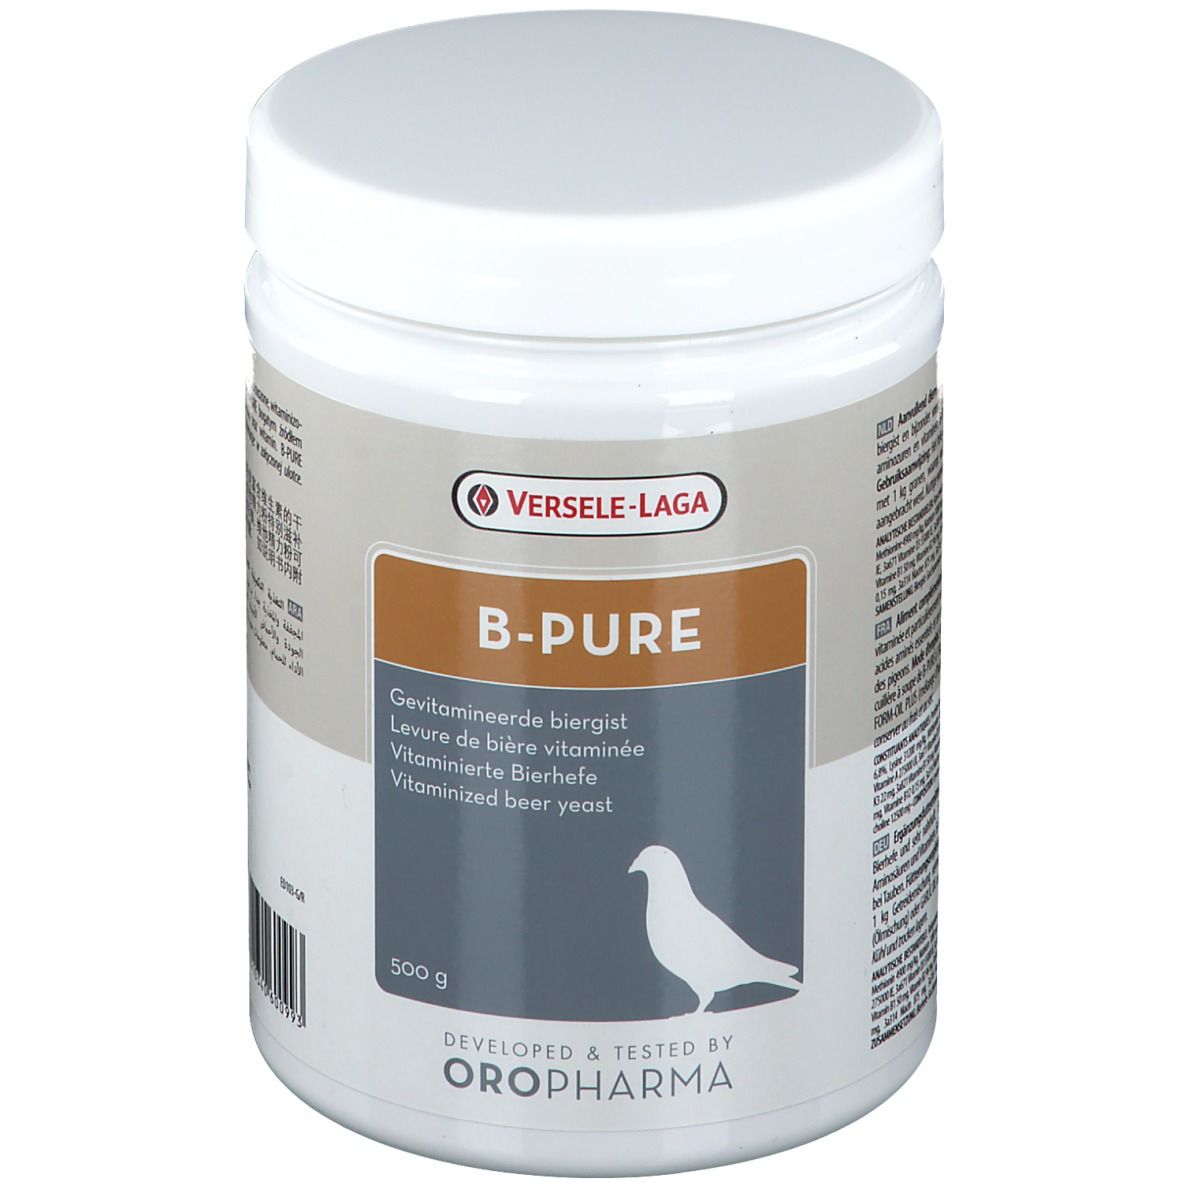 B-Pure Levure Biere Vitamine